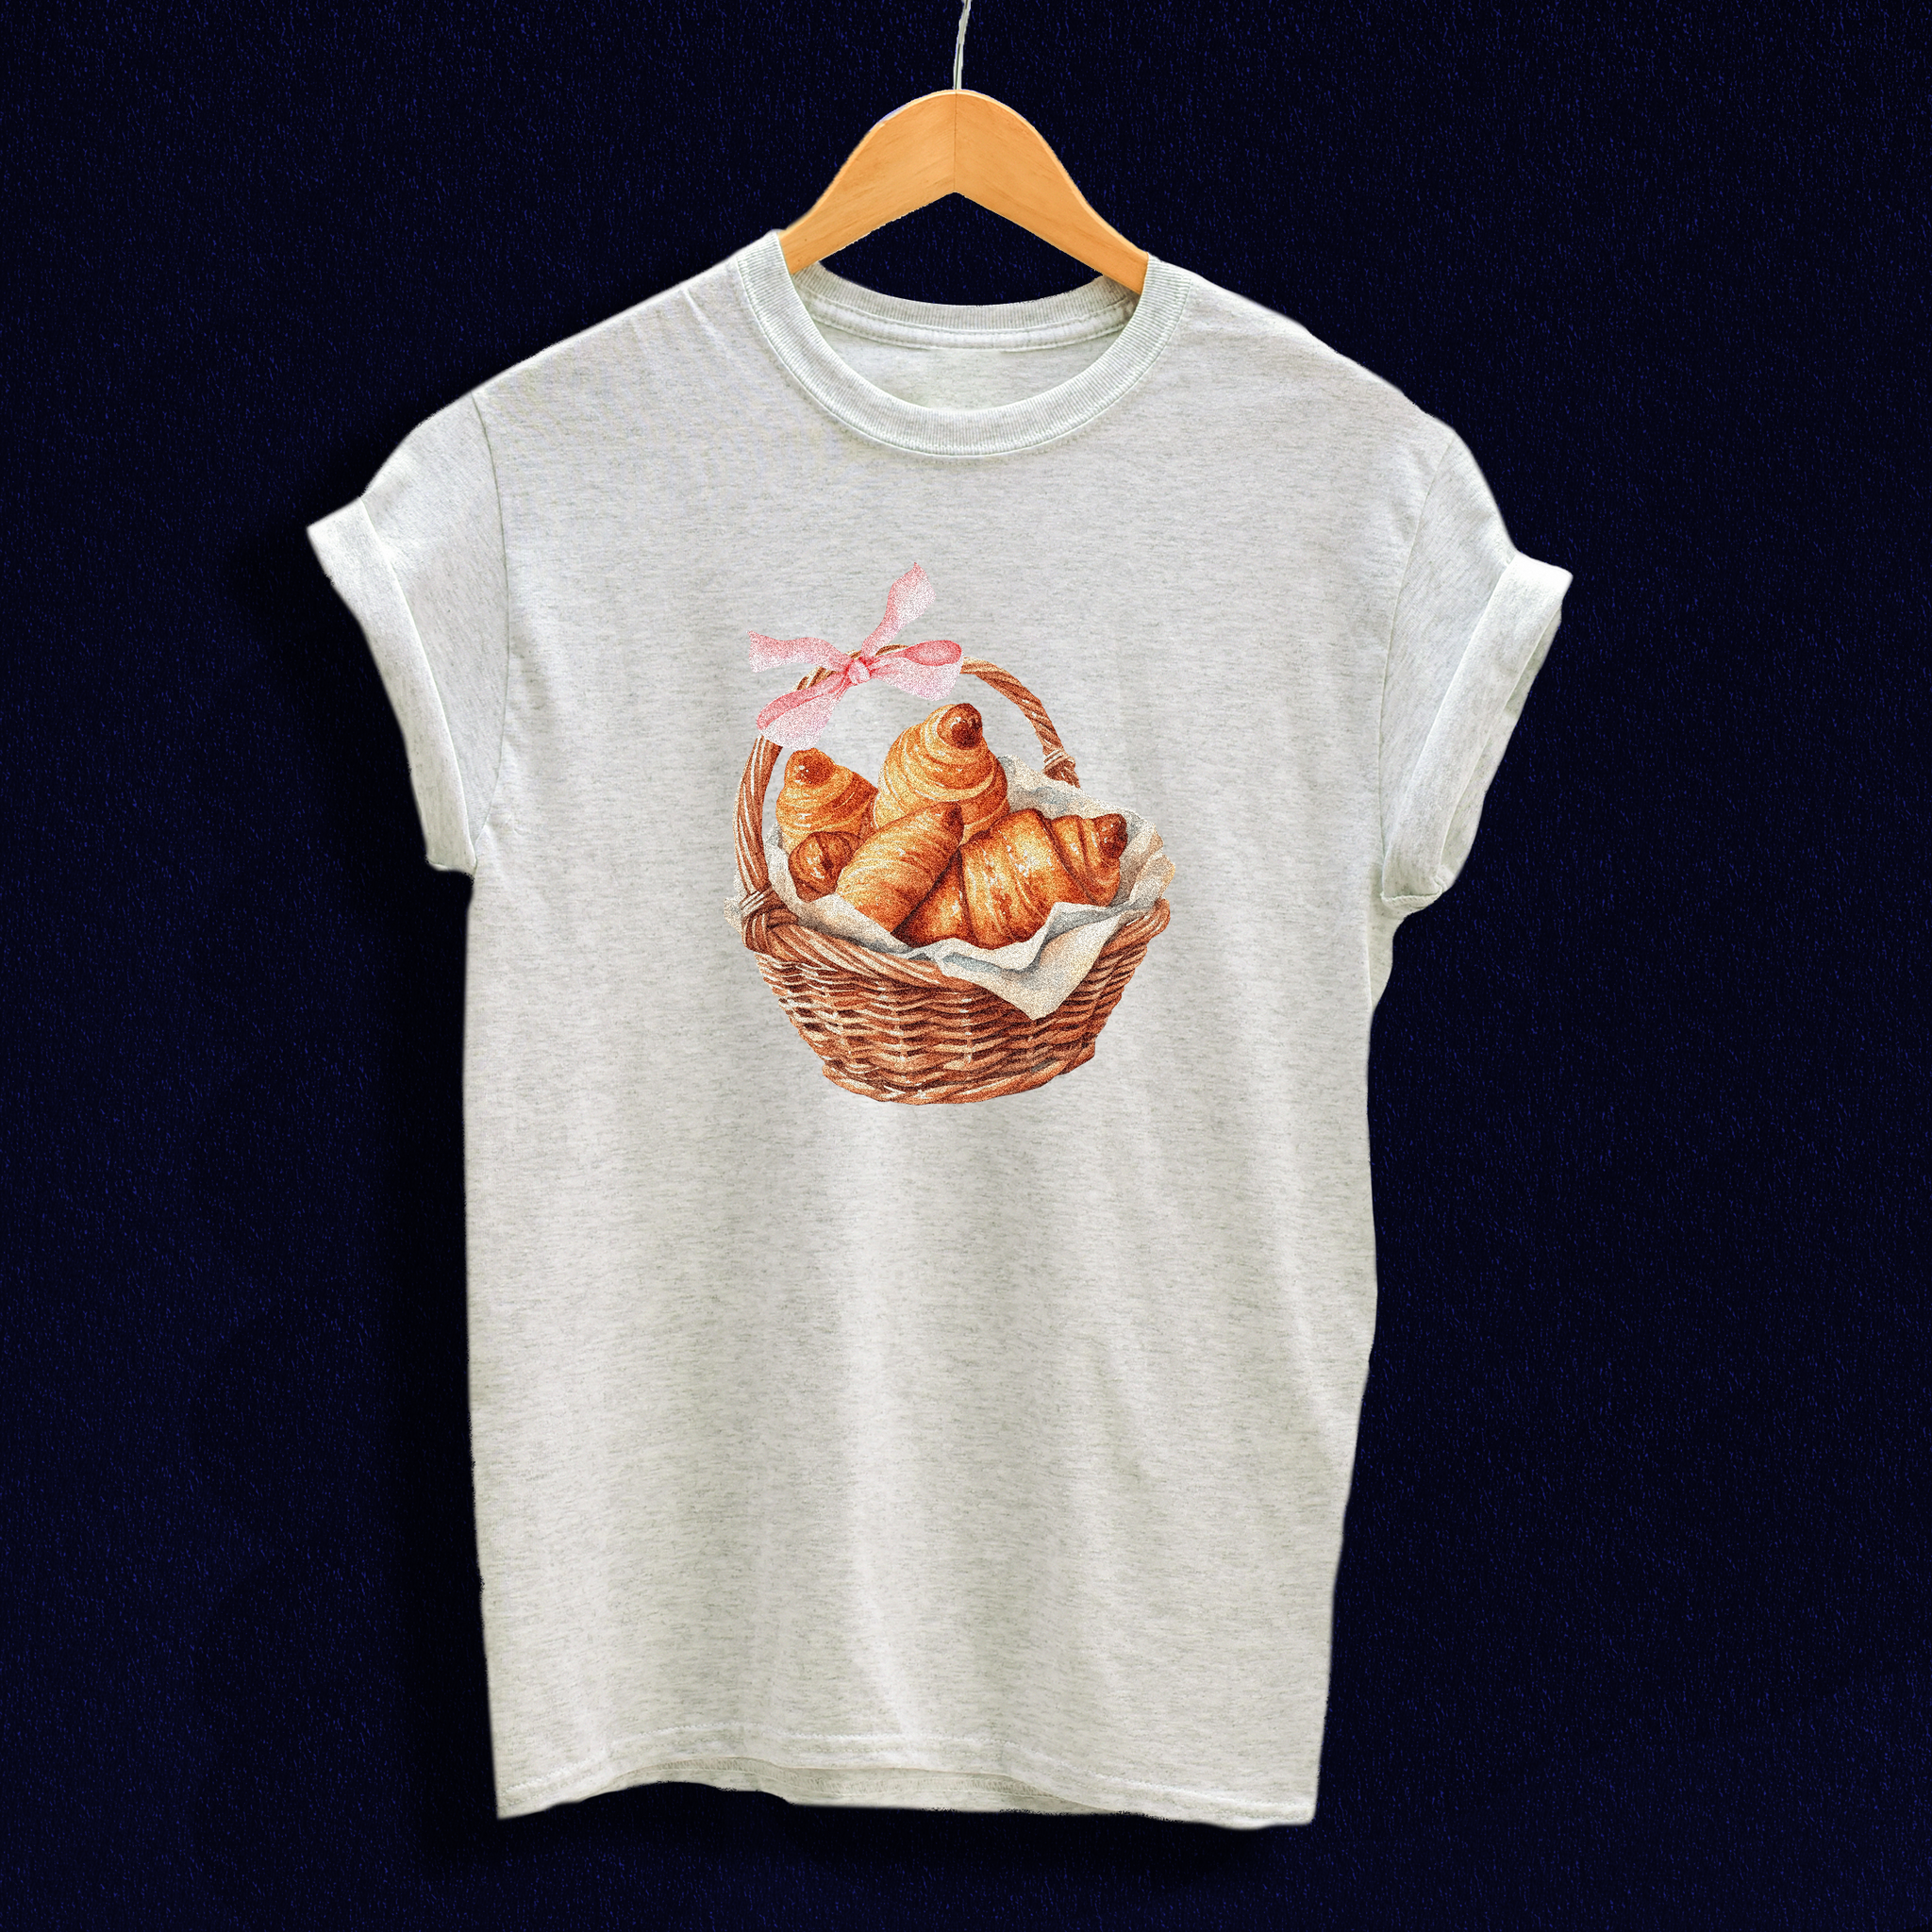 Croissants CottageCore Short-Sleeve Unisex T-Shirt